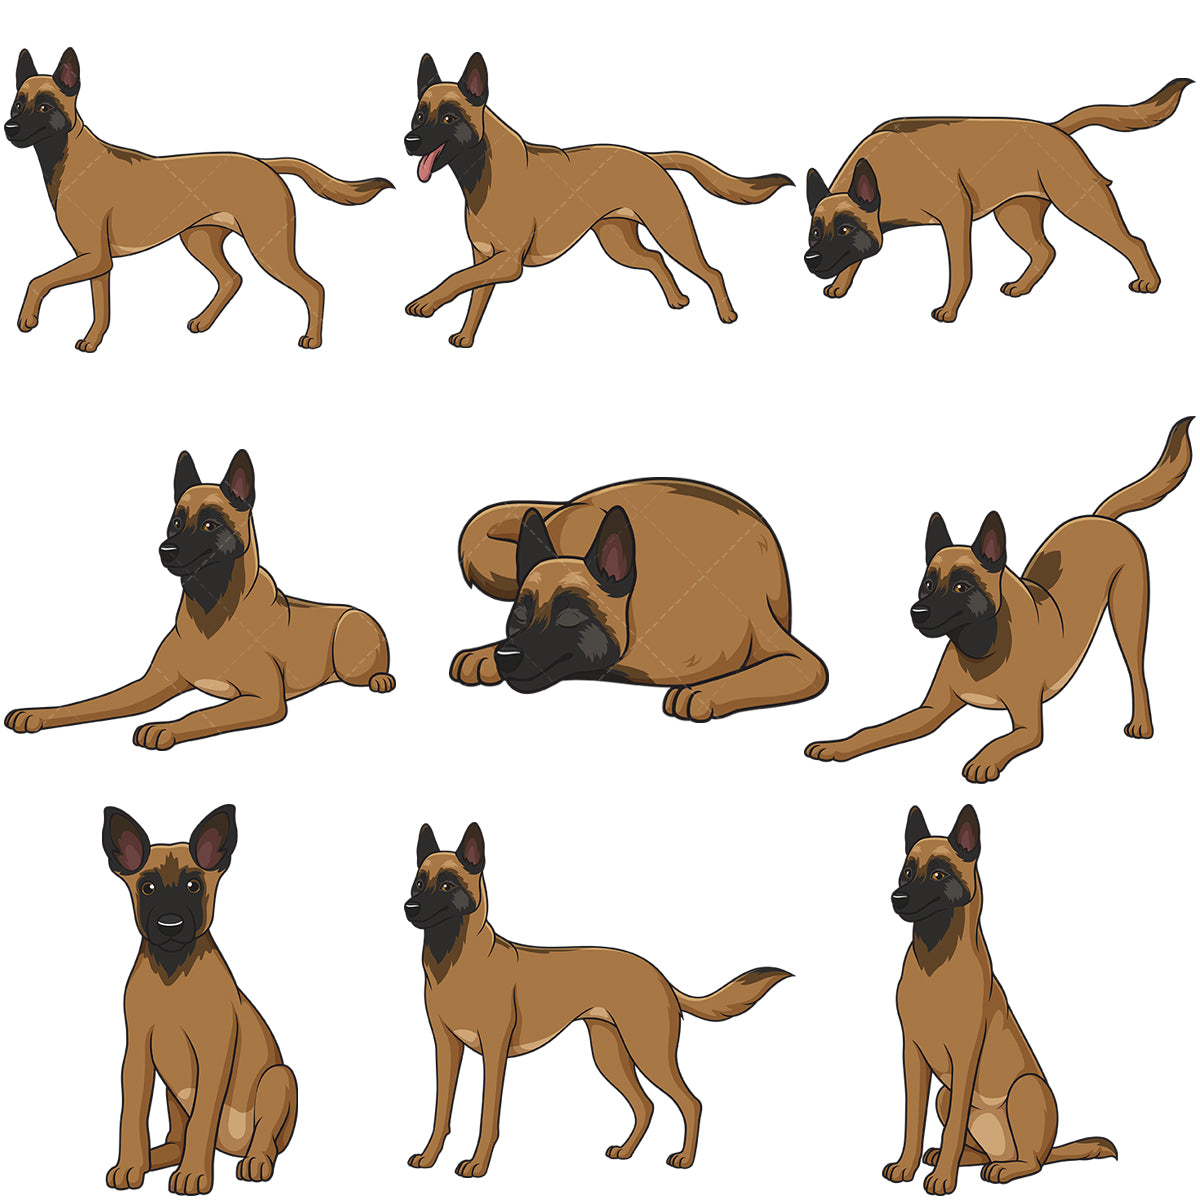 A bundle of 9 royalty-free stock vector illustrations of belgian shepherd dogs.